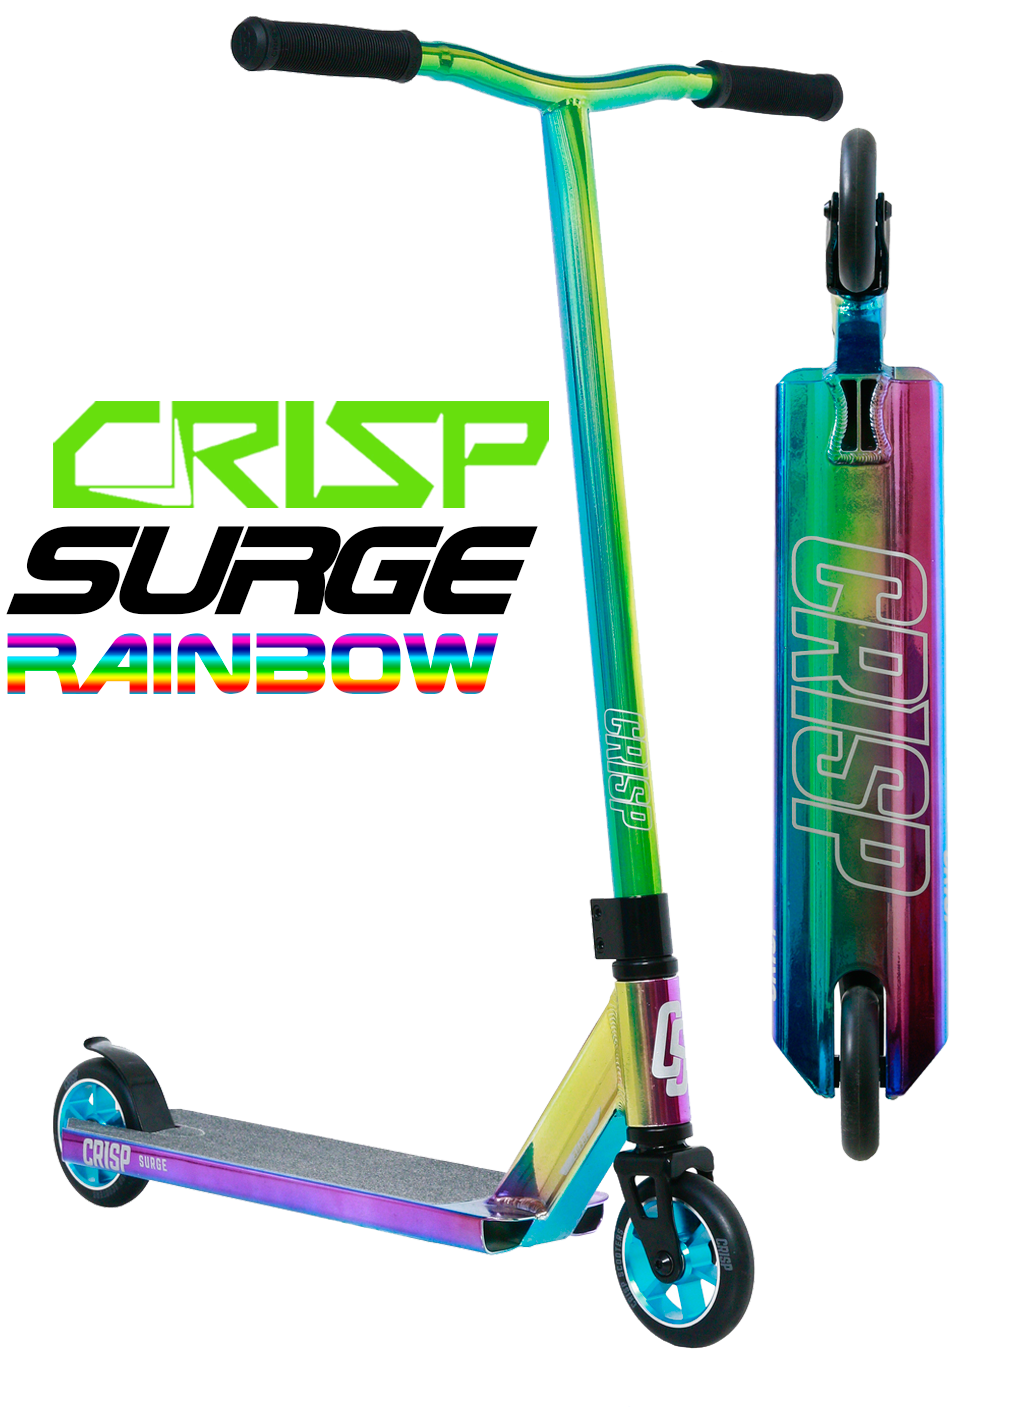 Crisp Surge Pro Scooter Neo Chrome/Green 